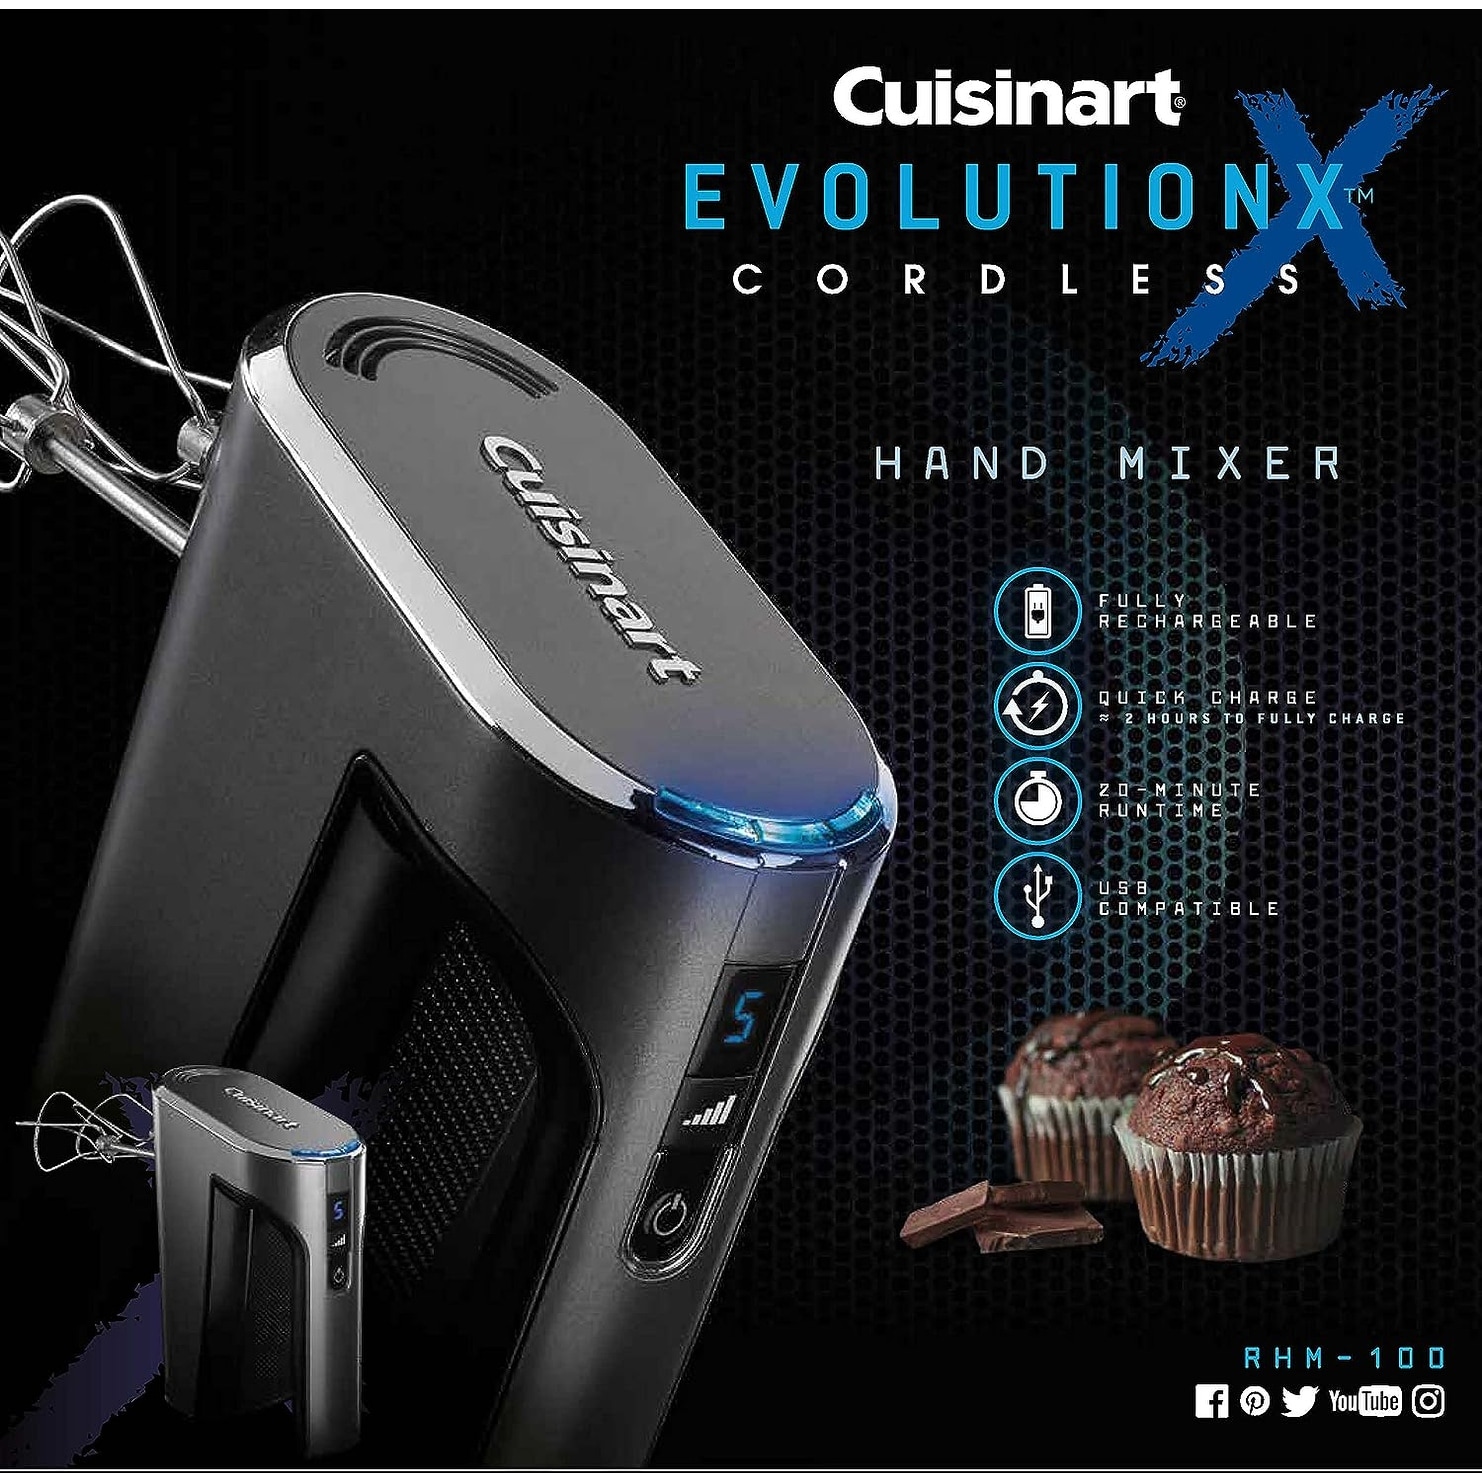 Cuisinart Evolution X Cordless 5 Speed Hand Mixer